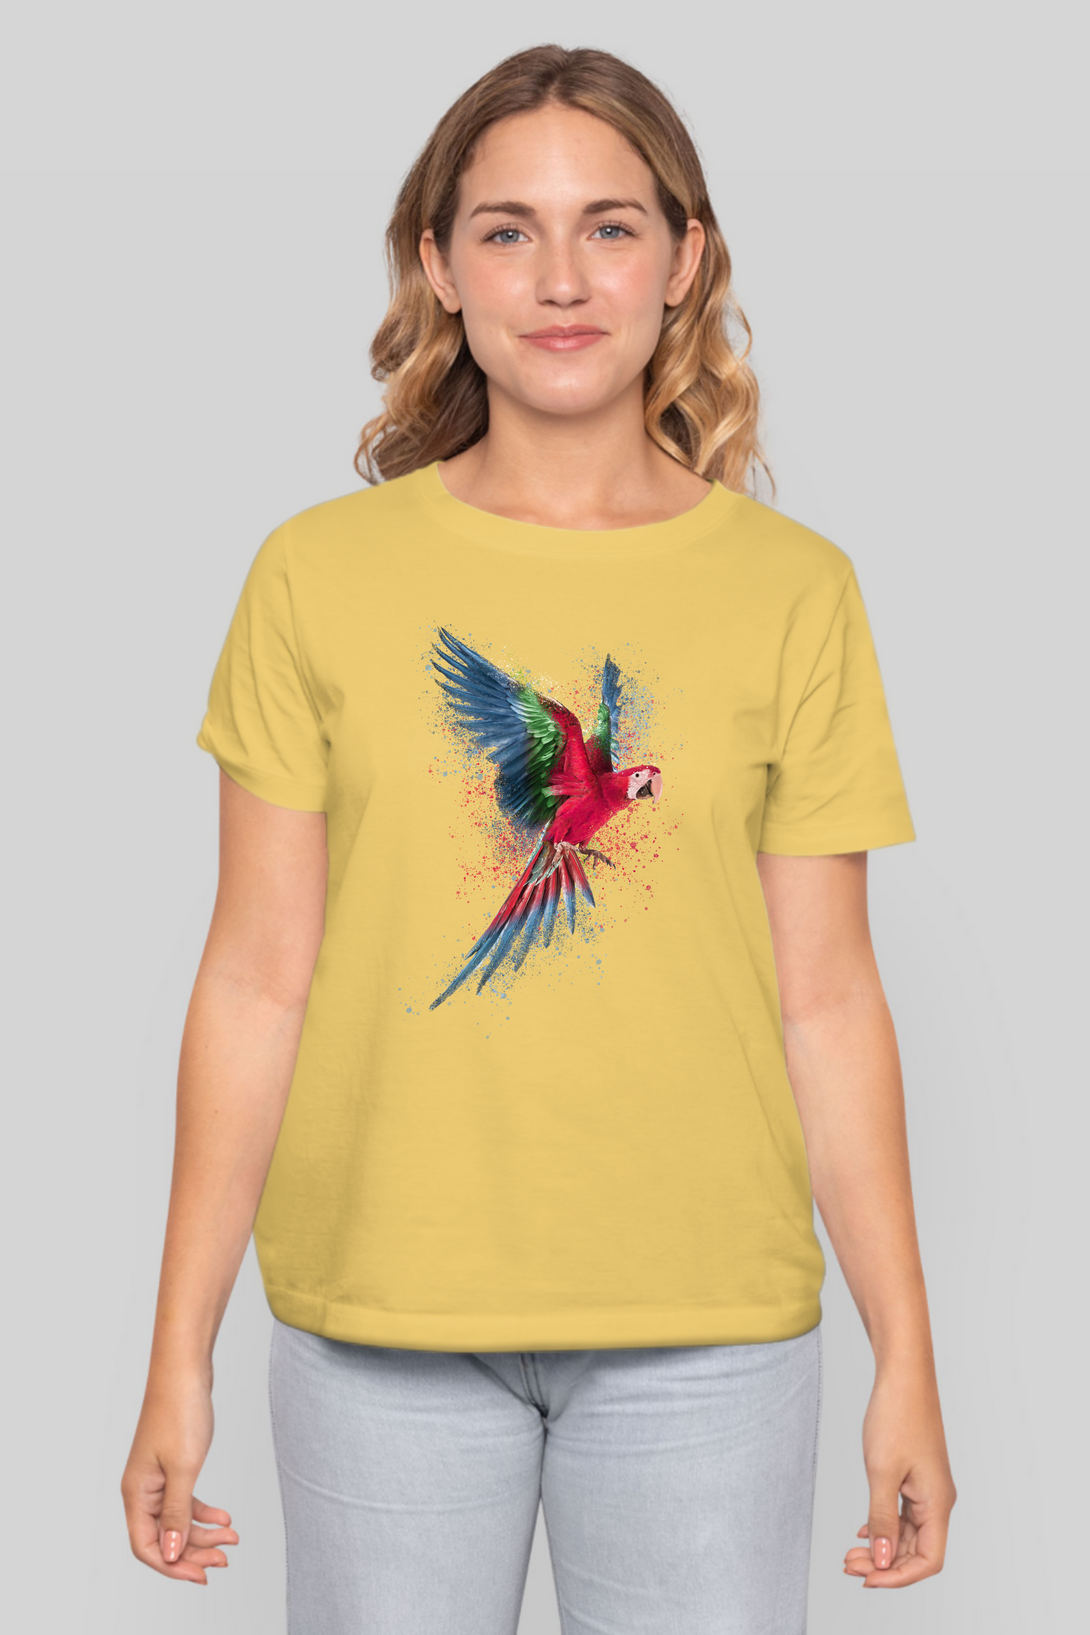 Vibrant Parrot Printed T-Shirt For Women - WowWaves - 7